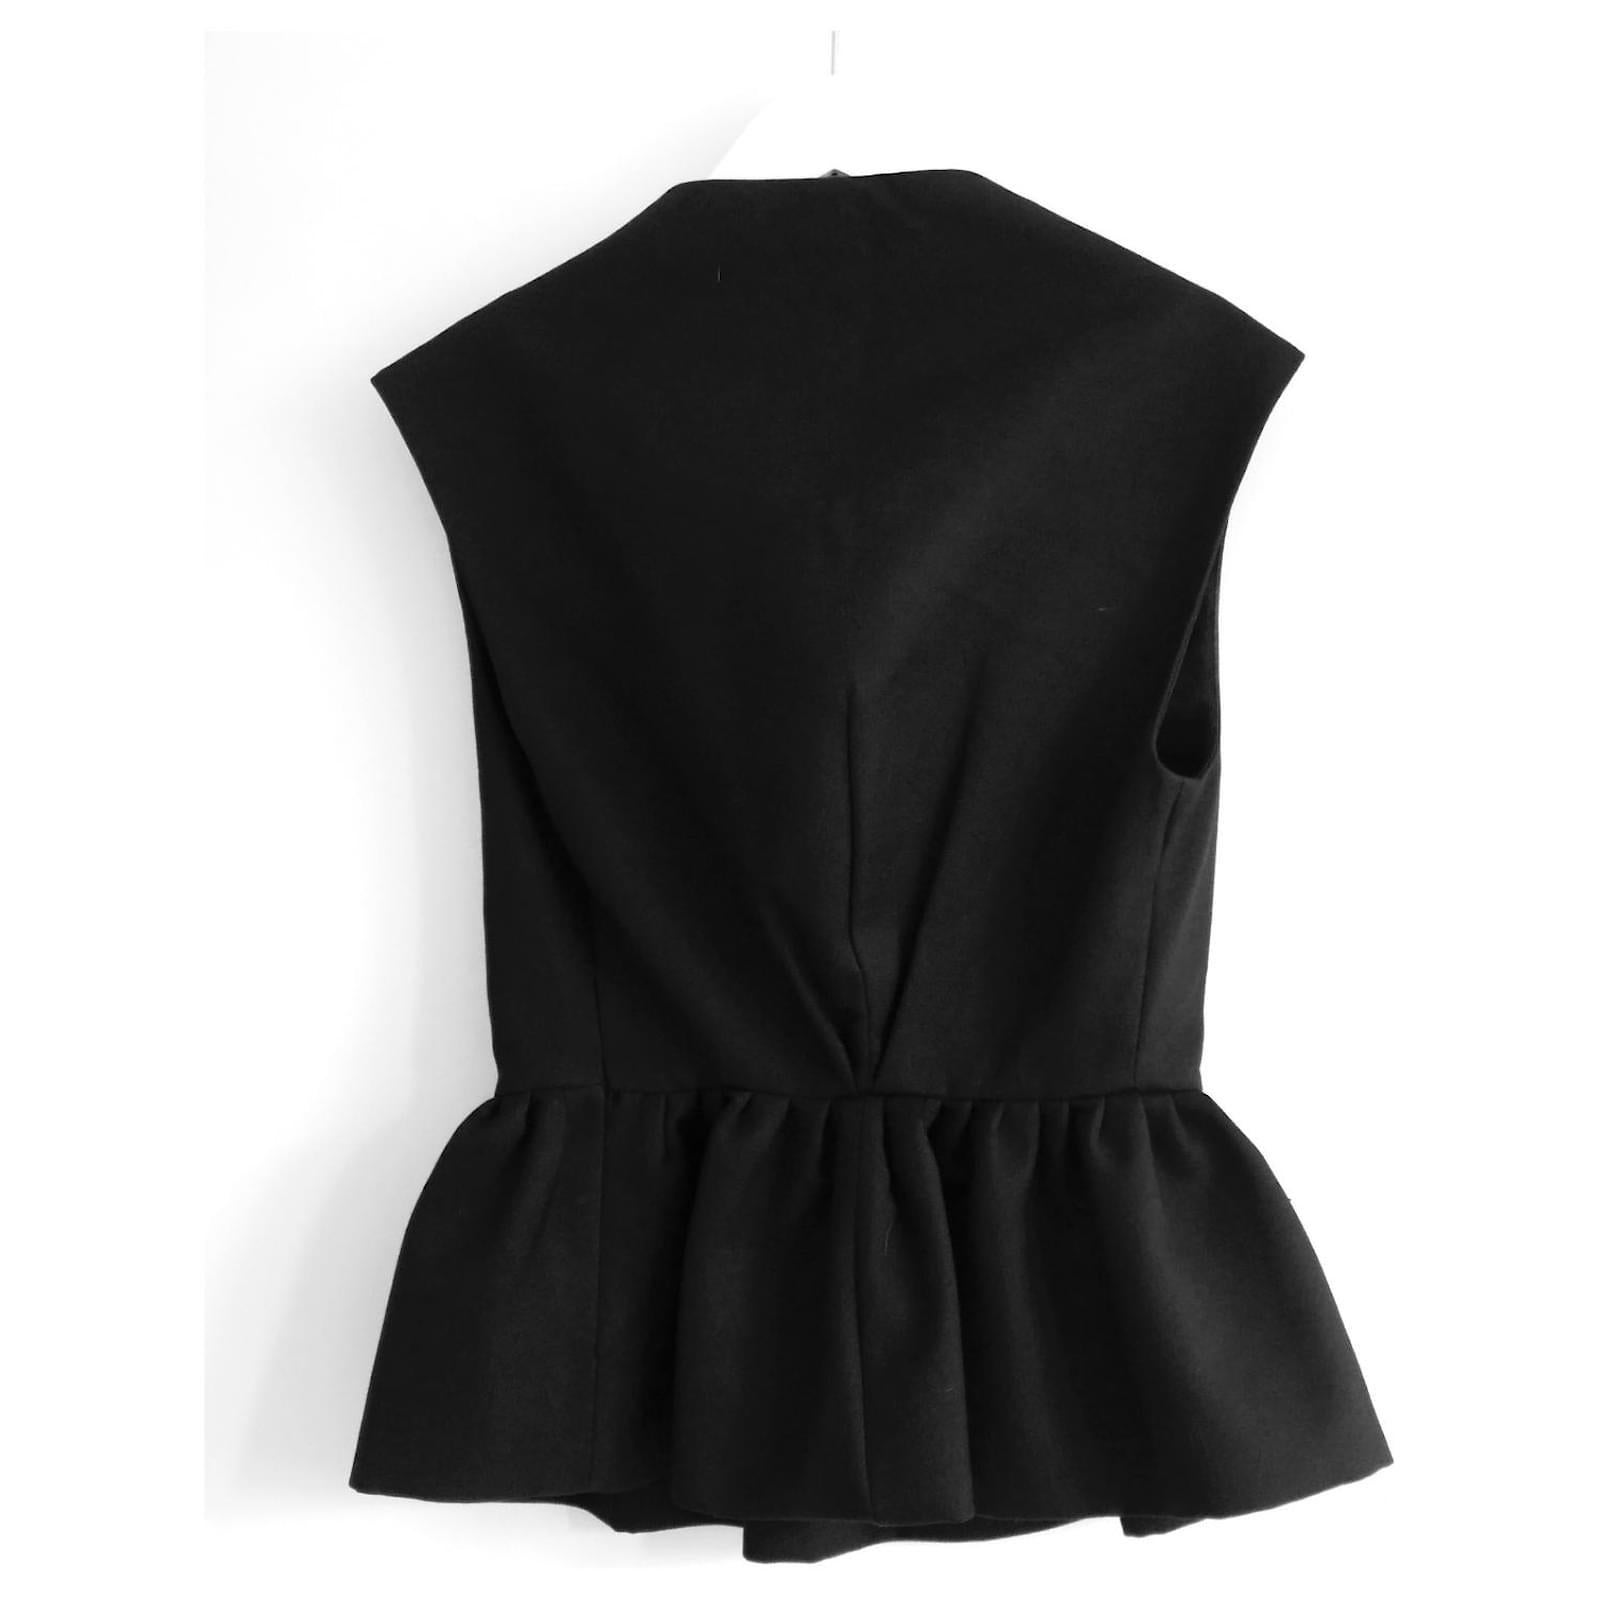 Women's Yves Saint Laurent x Stefano Pilati AW10 Black Peplum Top For Sale